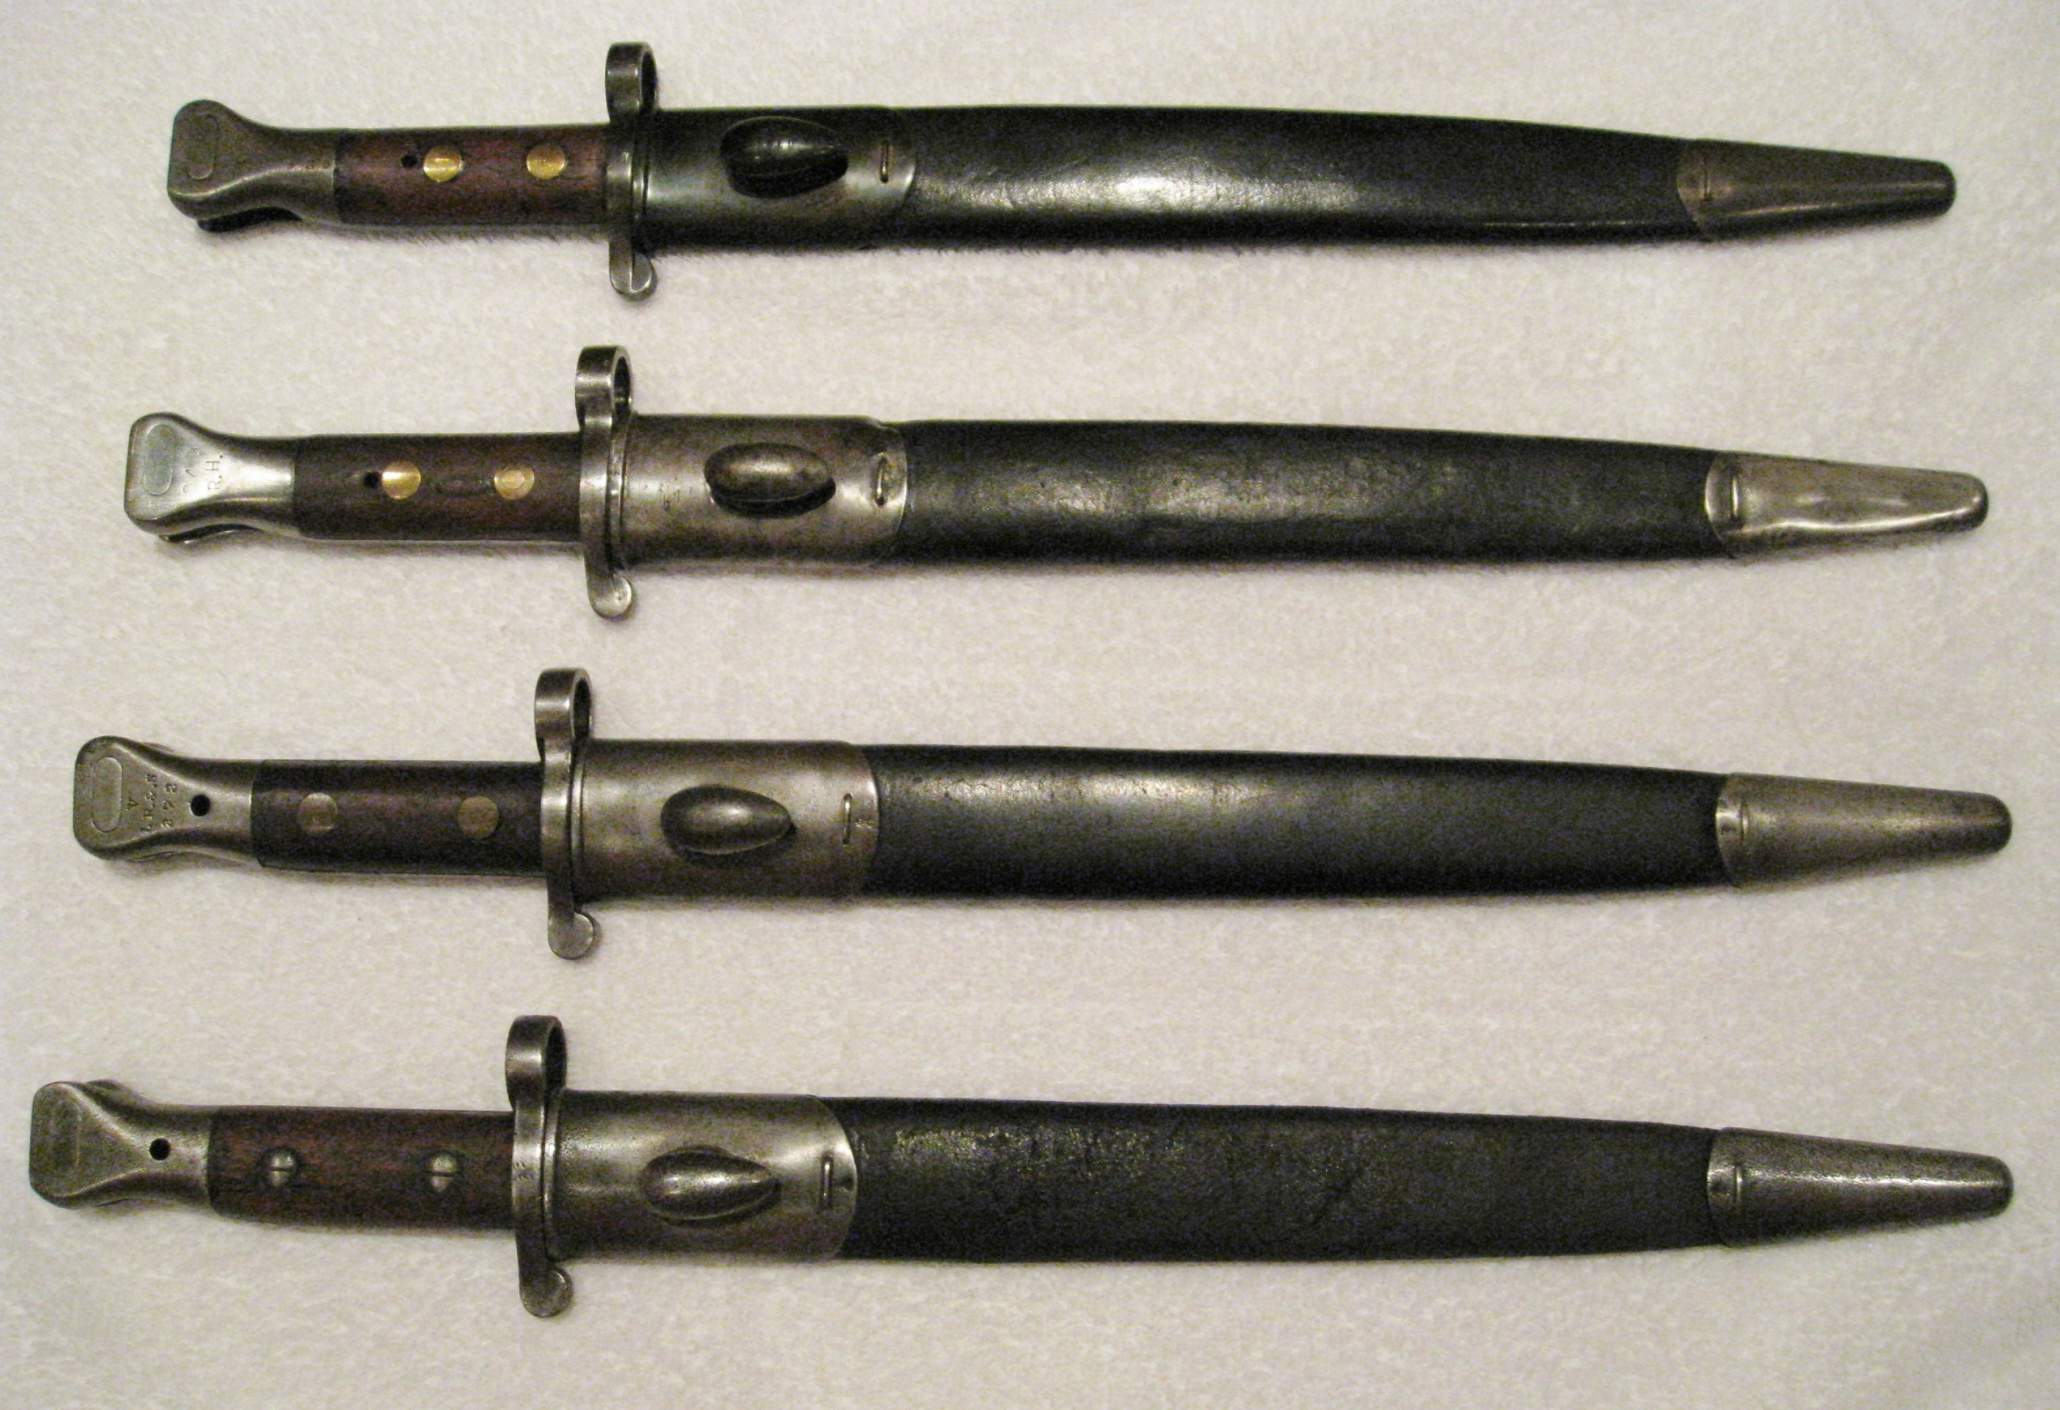 Some of my 1888 Pattern Bayonets